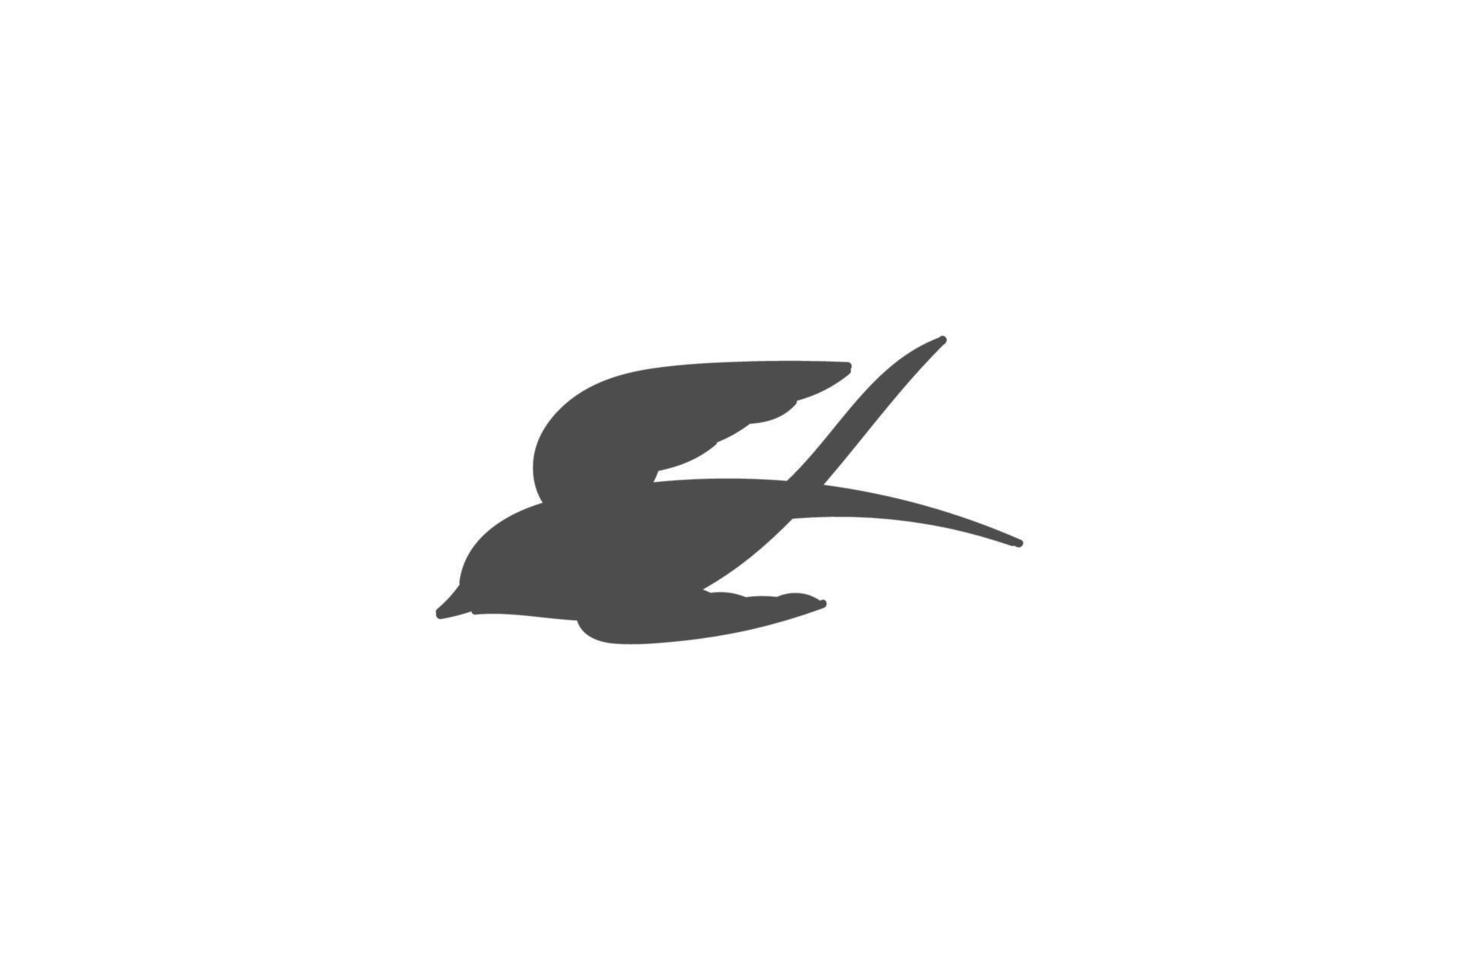 Simple Minimalist Flying Swallow Bird Silhouette Logo Design Vector